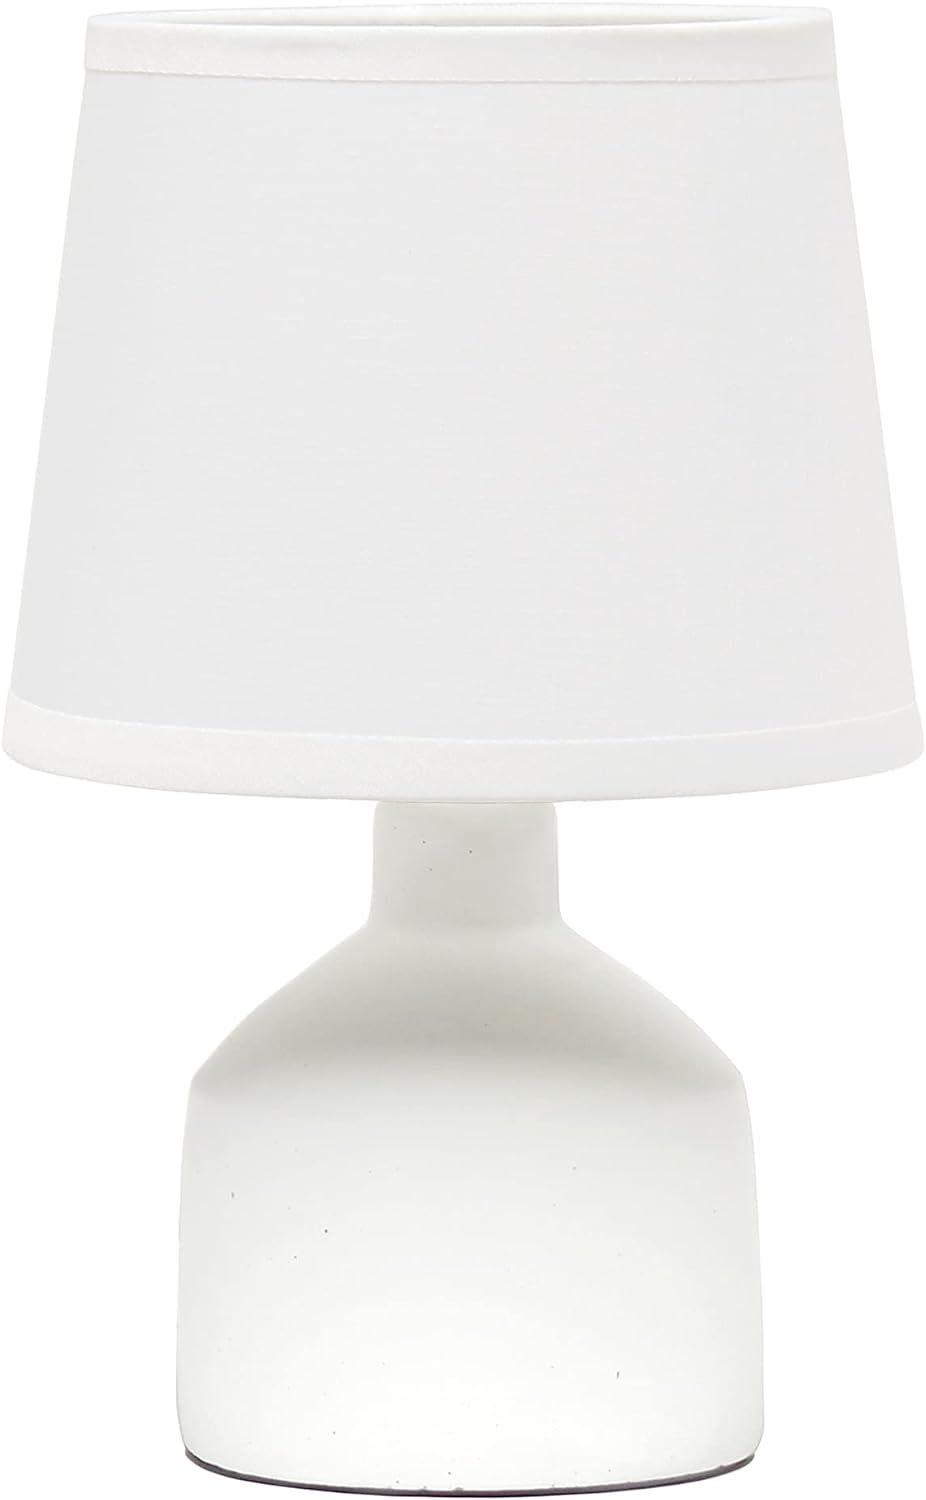 Simple Designs LT2080-OFF Mini Bocksbeutal Concrete Table Lamp, Off White | Amazon (US)